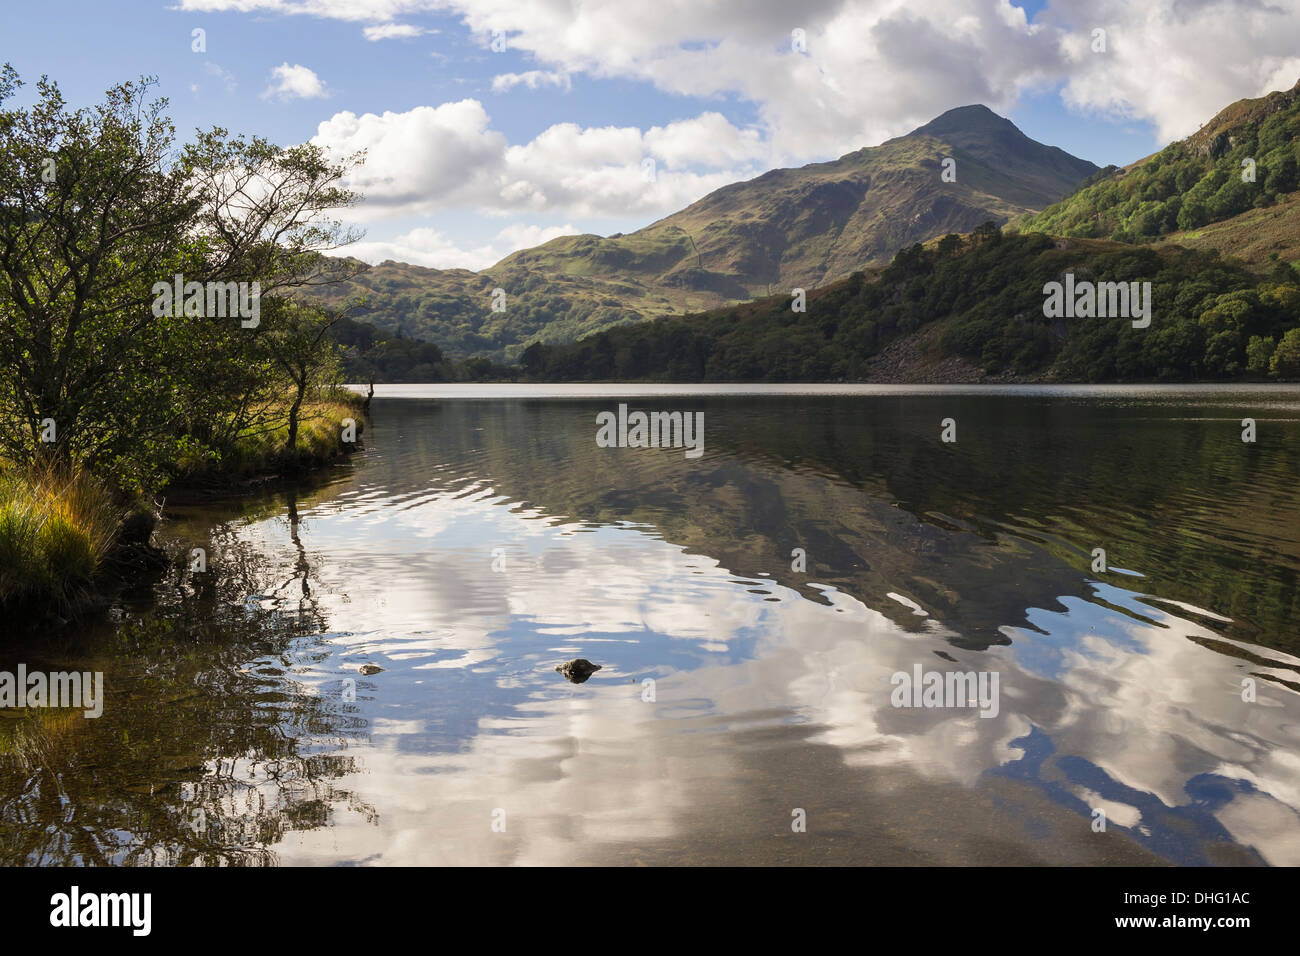 Yr Aran mountain reflected in rippled waters of Llyn Gwynant lake in mountains of Snowdonia, Nant Gwynant, North Wales, UK Stock Photo